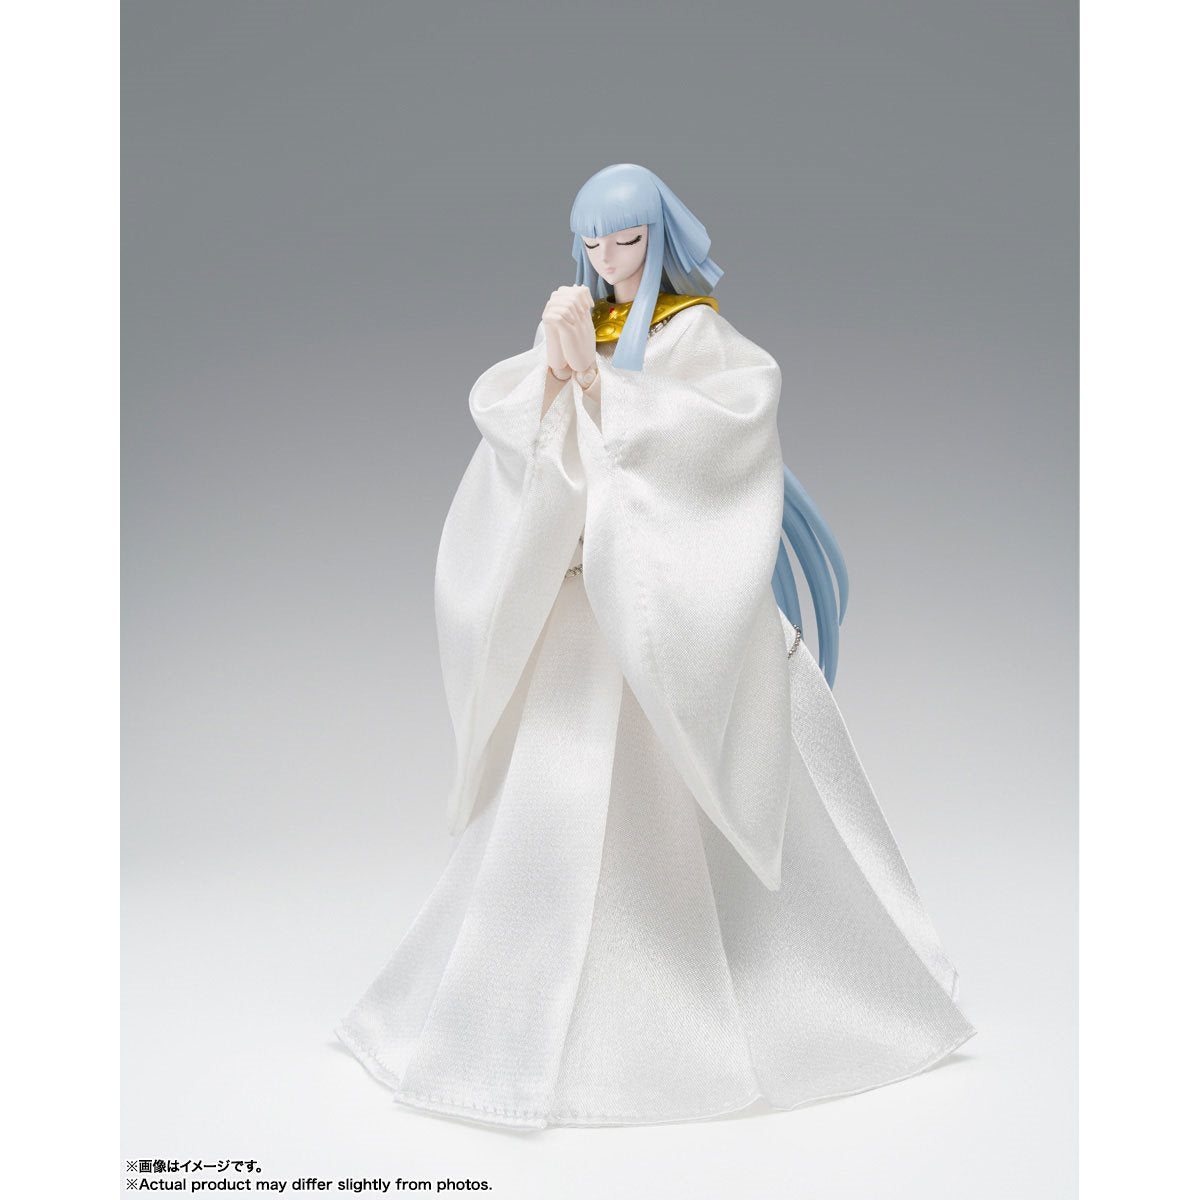 Bandai Tamashi Nations Myth Cloth EX: Saint Seiya Saga de Asgard - Hilda de Polaris Figura de Acci‚àö‚â•n